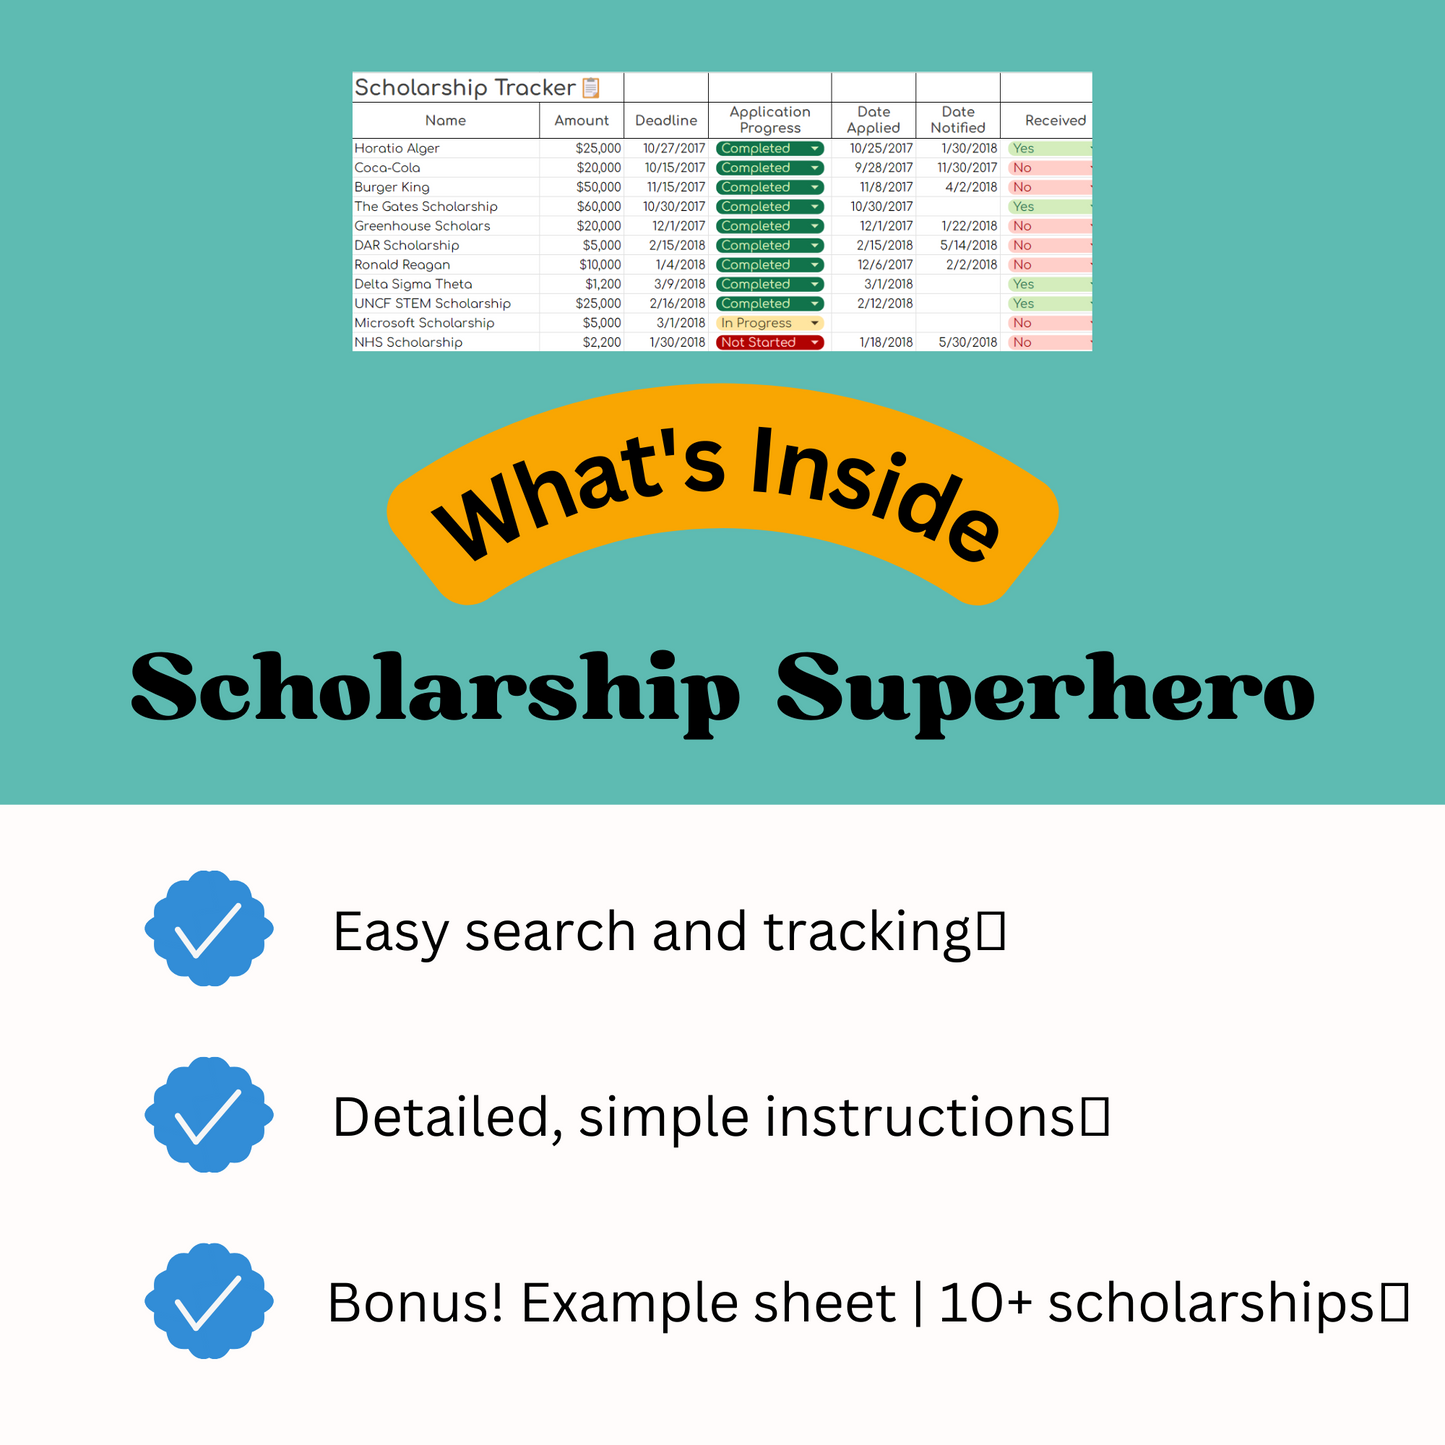 Scholarship Superhero: The Ultimate Tracker for Winning Big📝